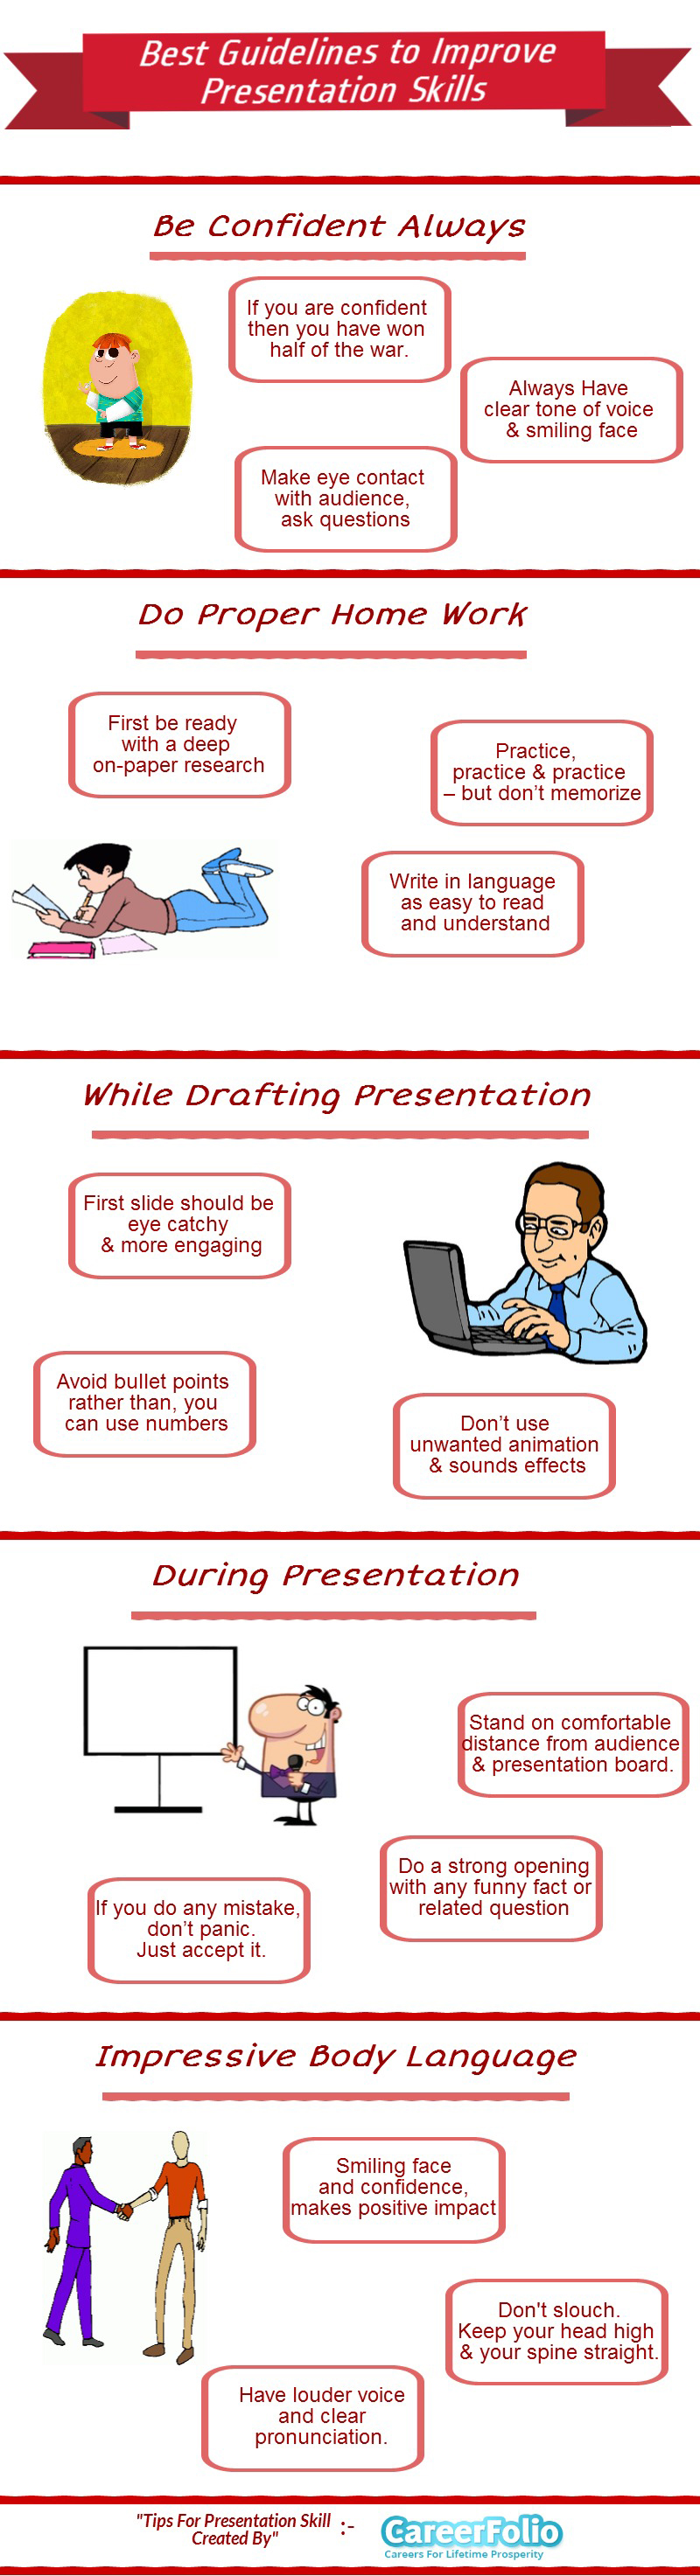 How to Improve Presentation Skills